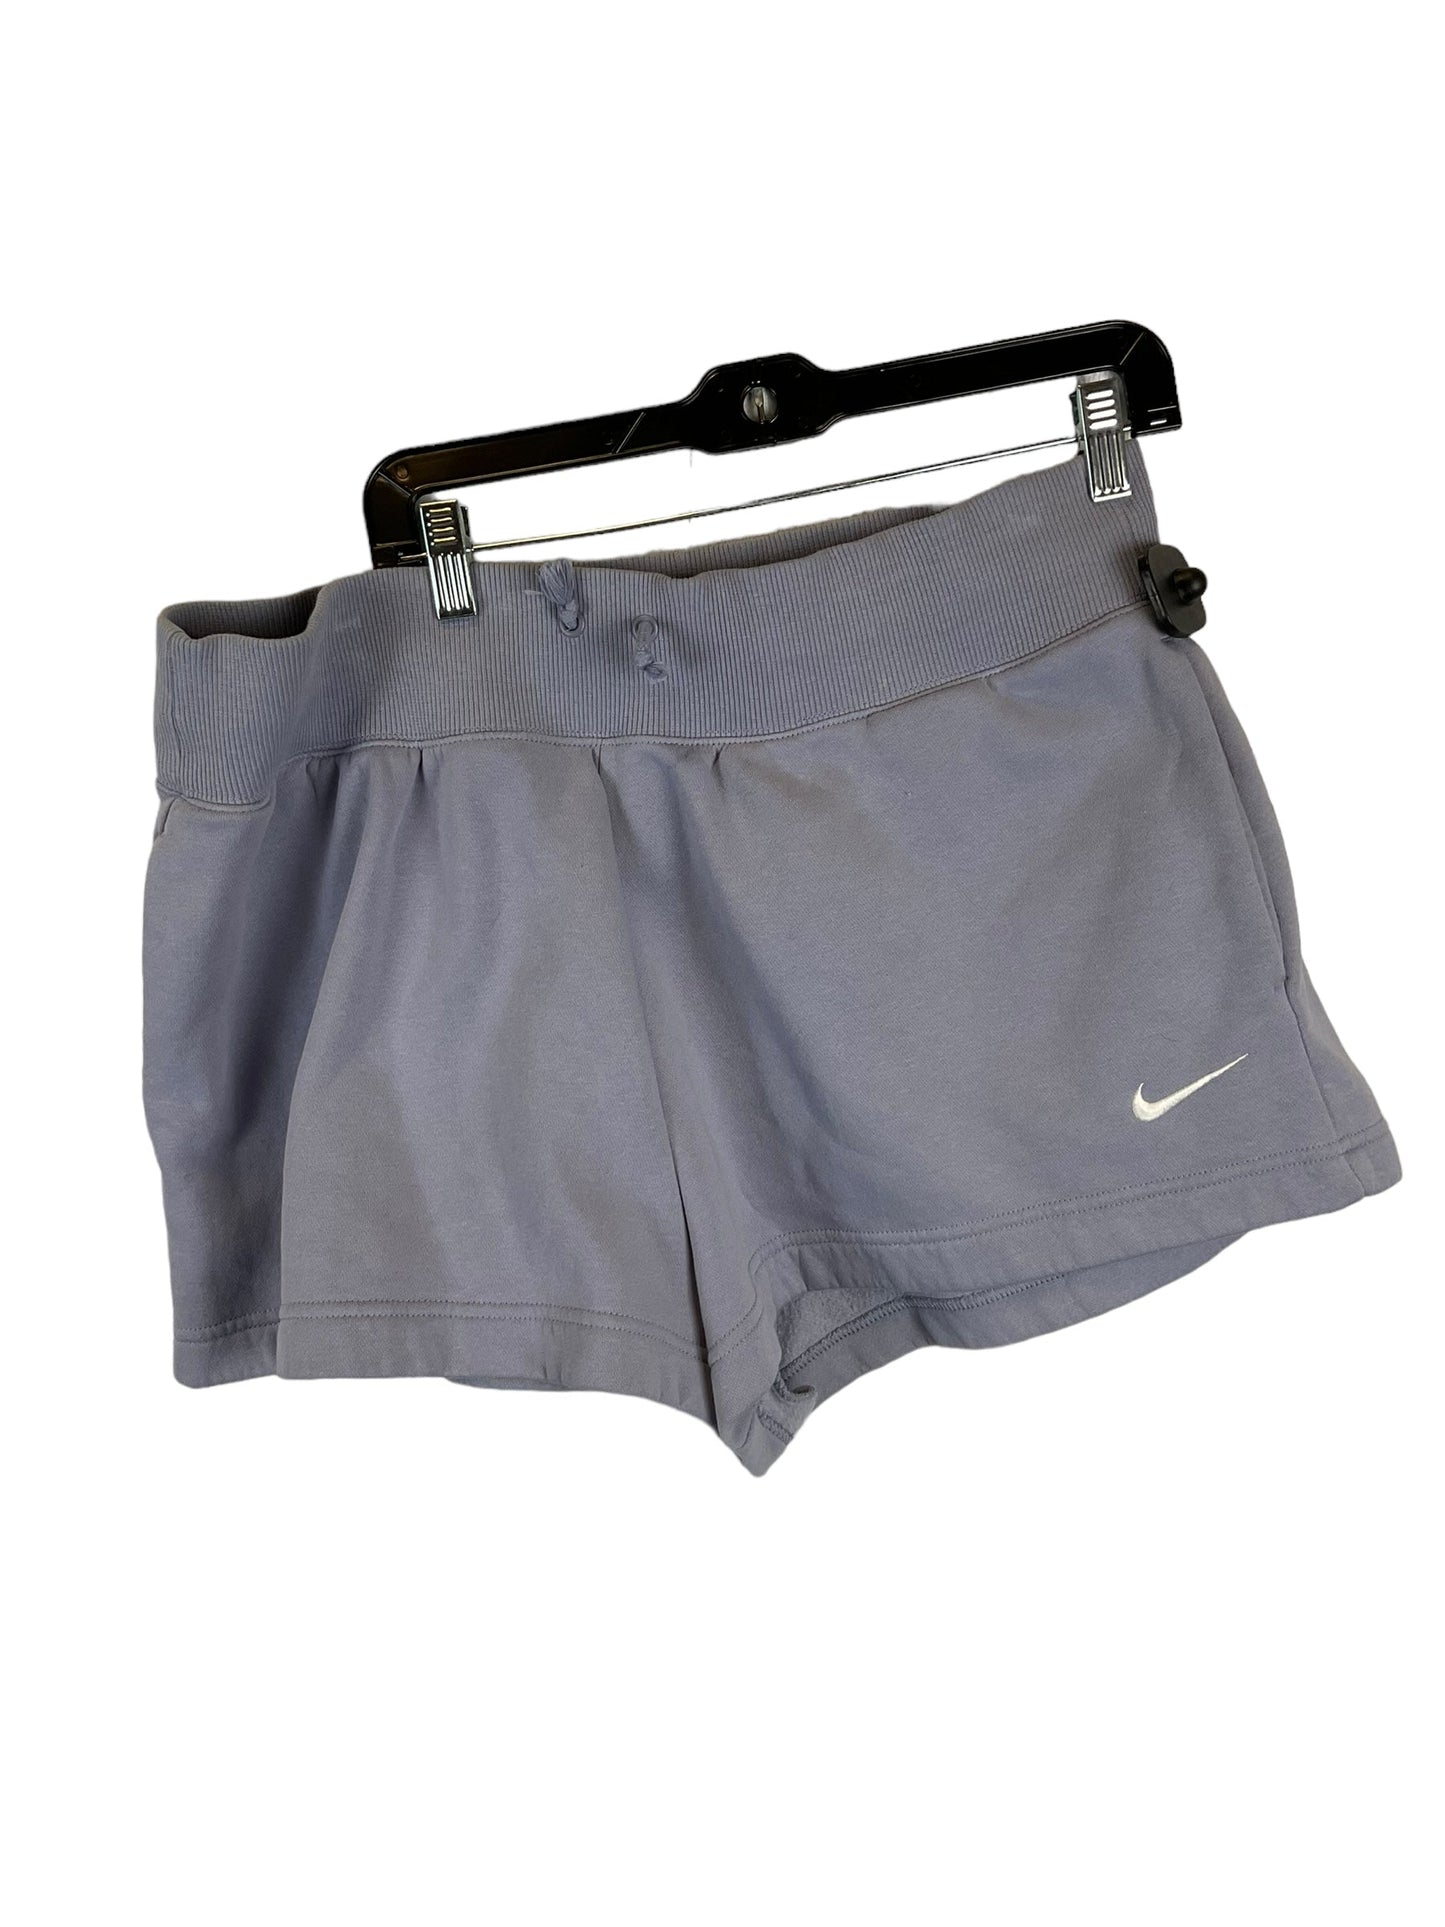 Purple Shorts Nike Apparel, Size Xl